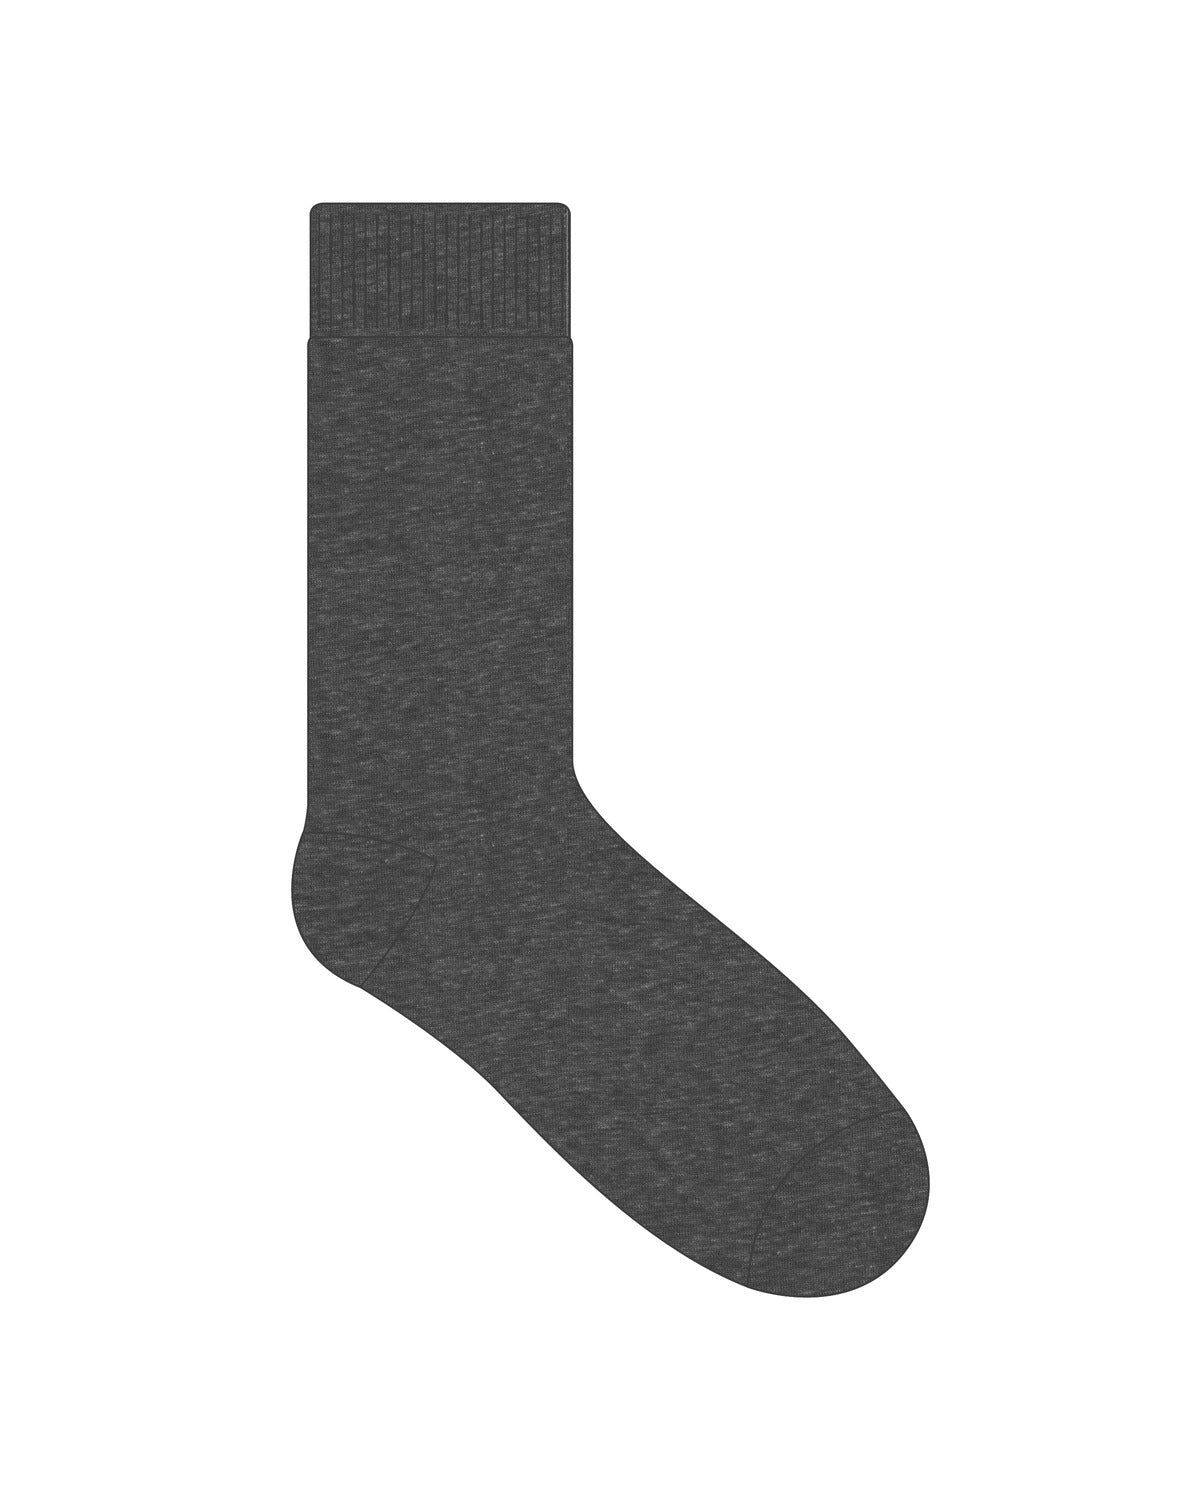 JJJENS Socks - dark grey melange